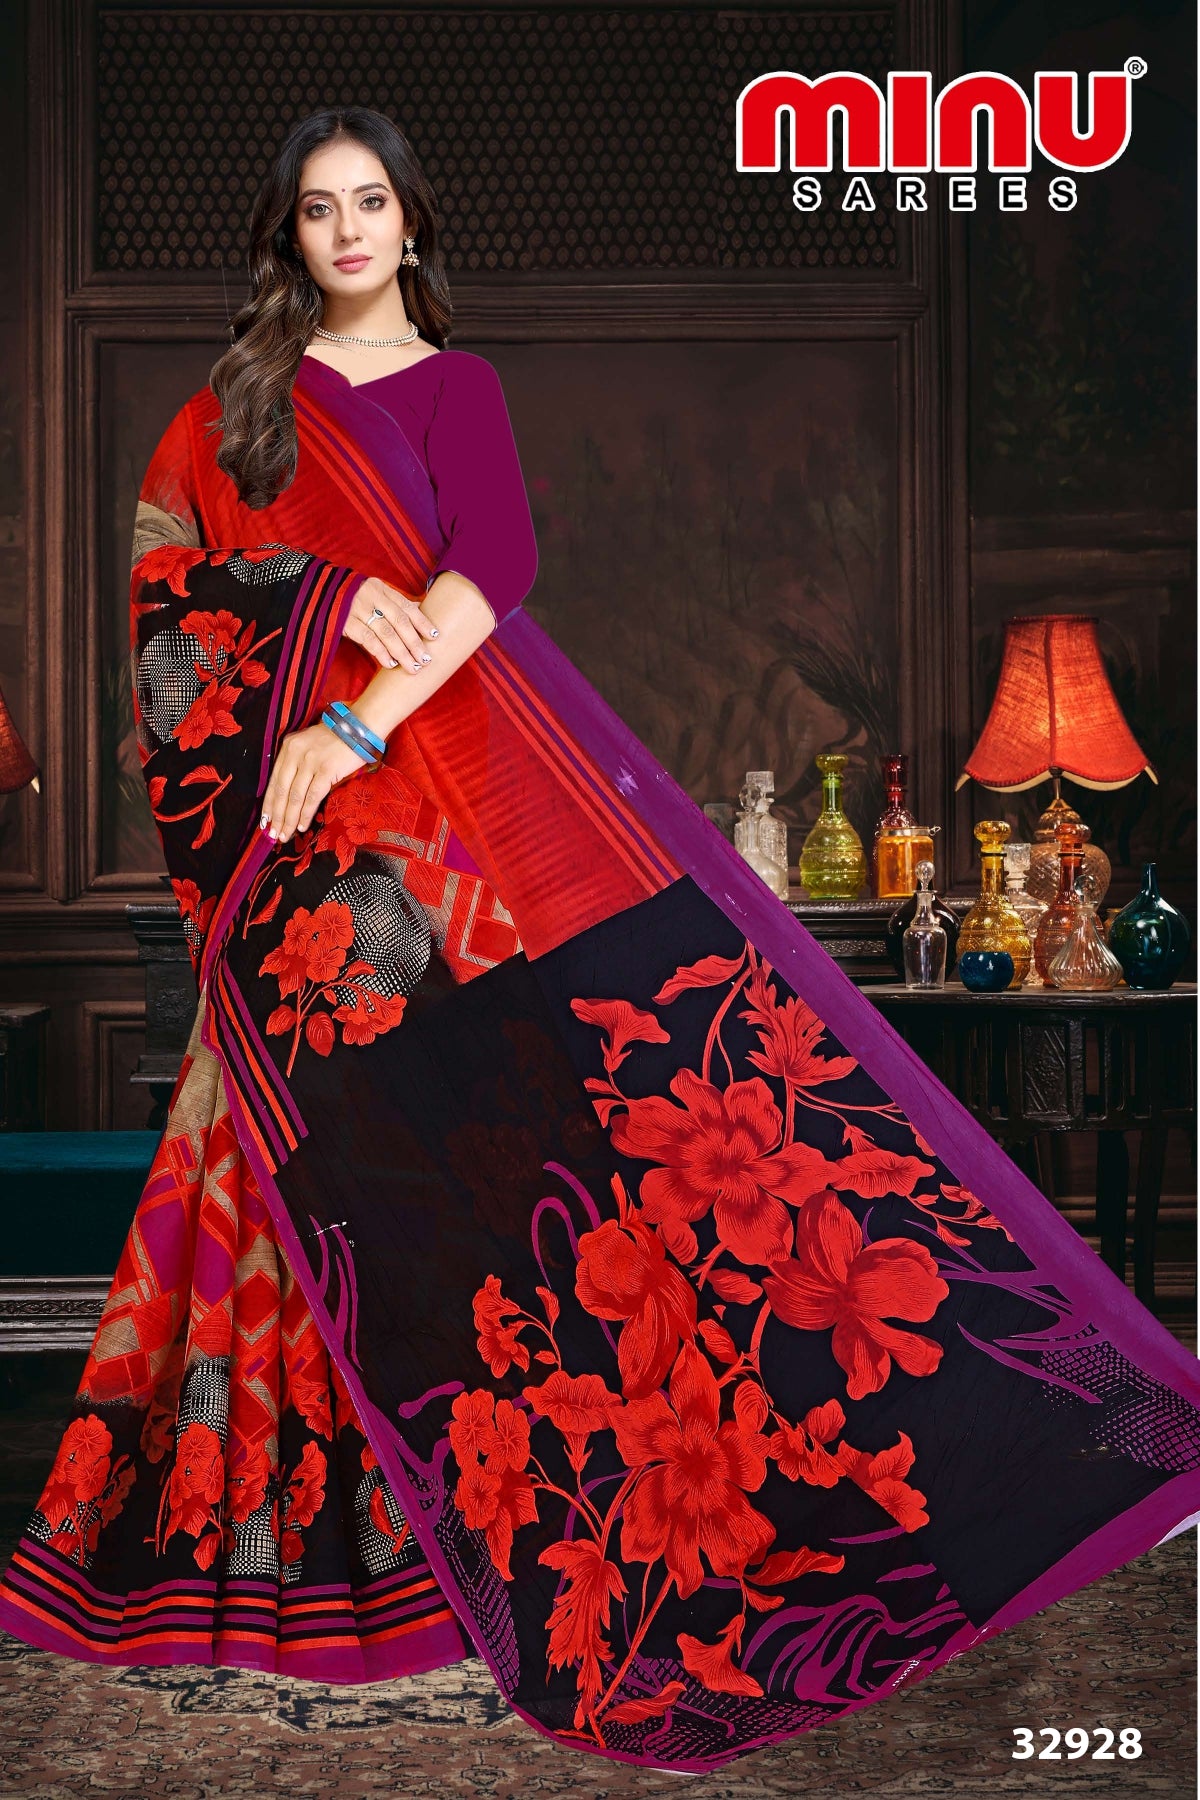 Bold and classy printed saree wearing woman